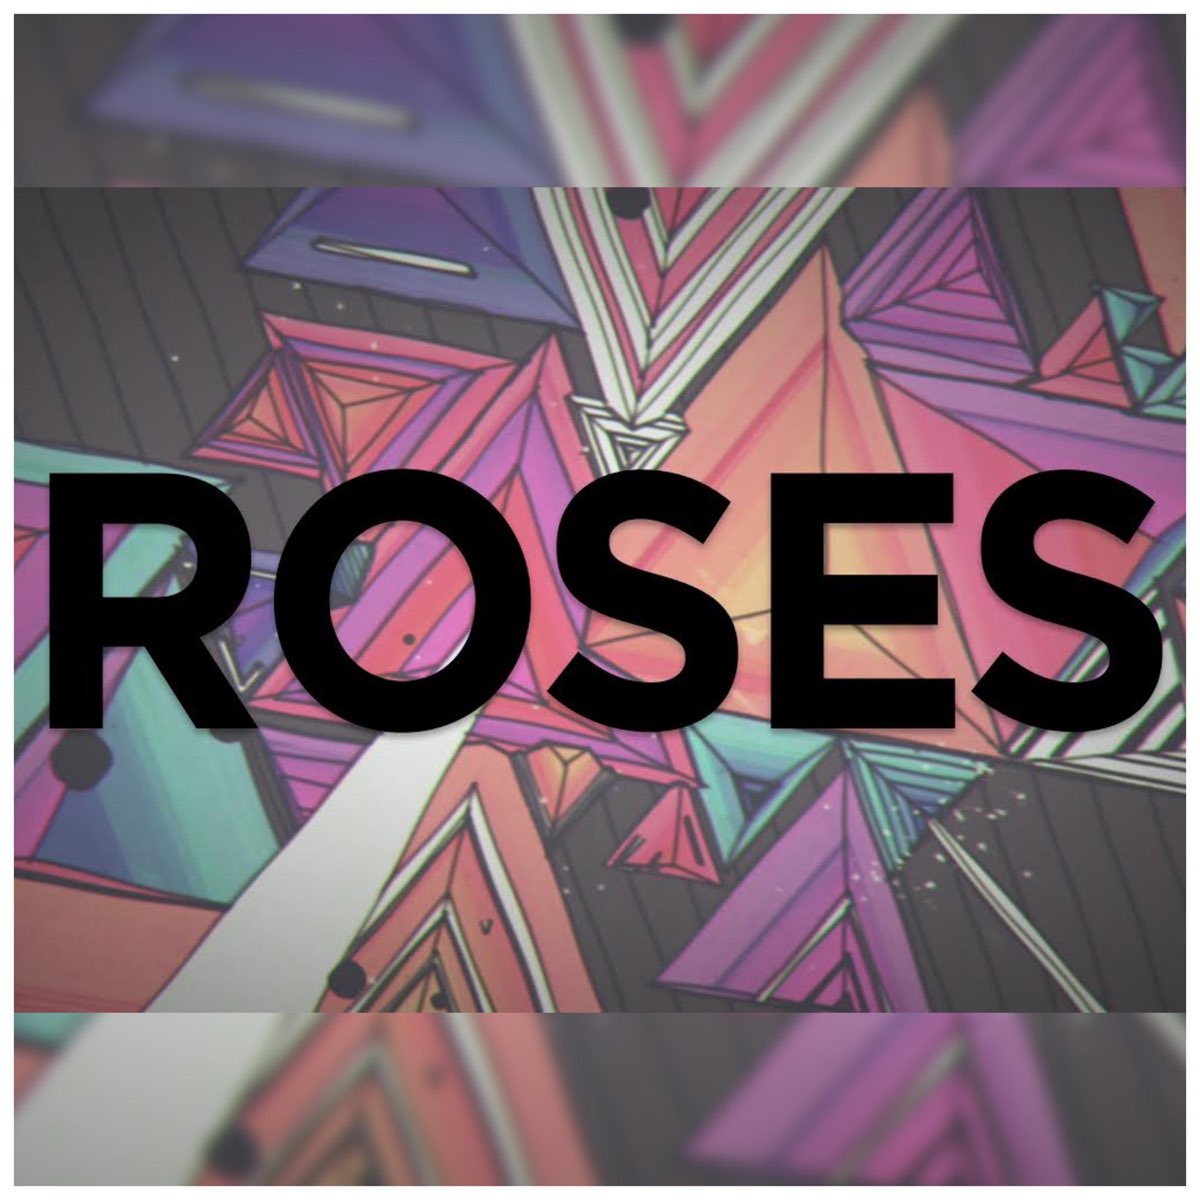 Emie keep on moving. House альбом розовый. The Chainsmokers Roses. Номис. Emie.